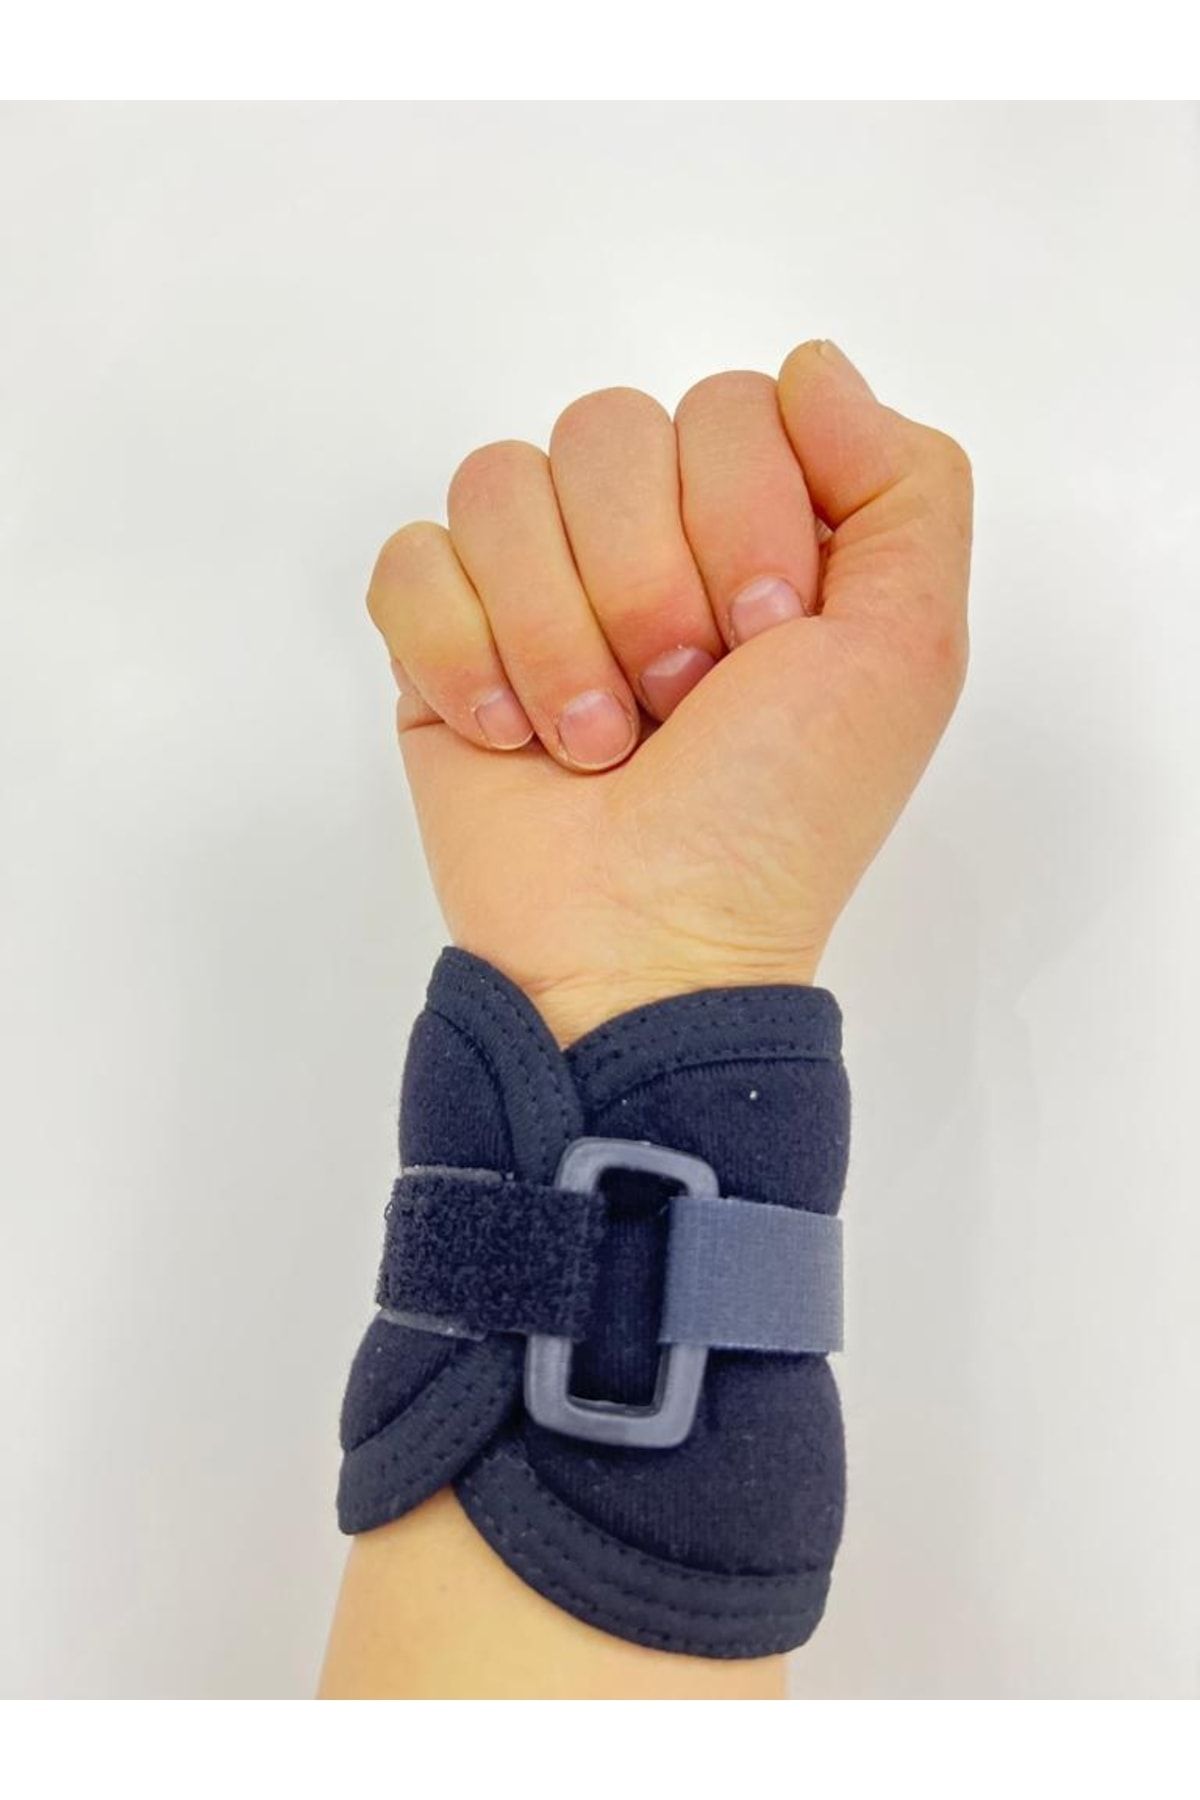 Adjustable Wrist Brace,Sports Wrist Strap Adjustable Wrist Wrap